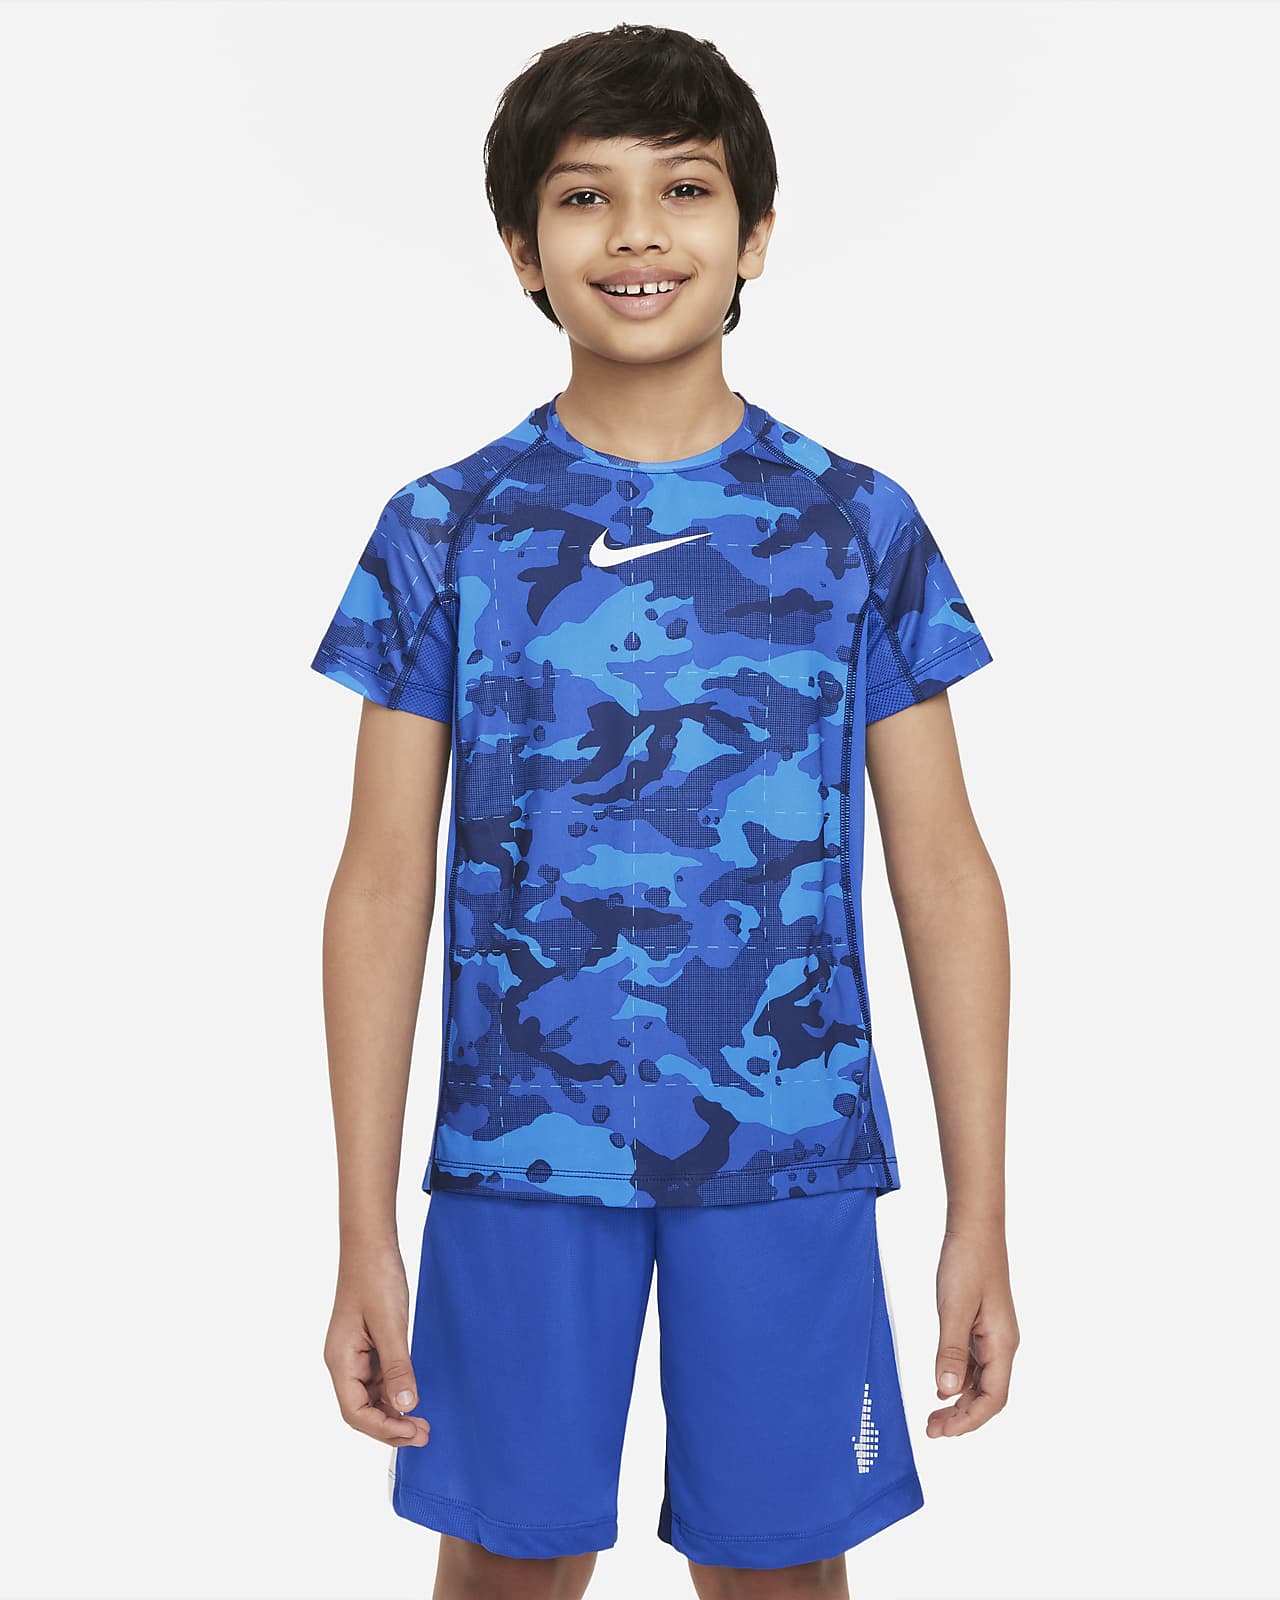 Nike Pro Warm Mock Neck Base Layer Top Junior Boys, Size 9 - 10 Years, Blue